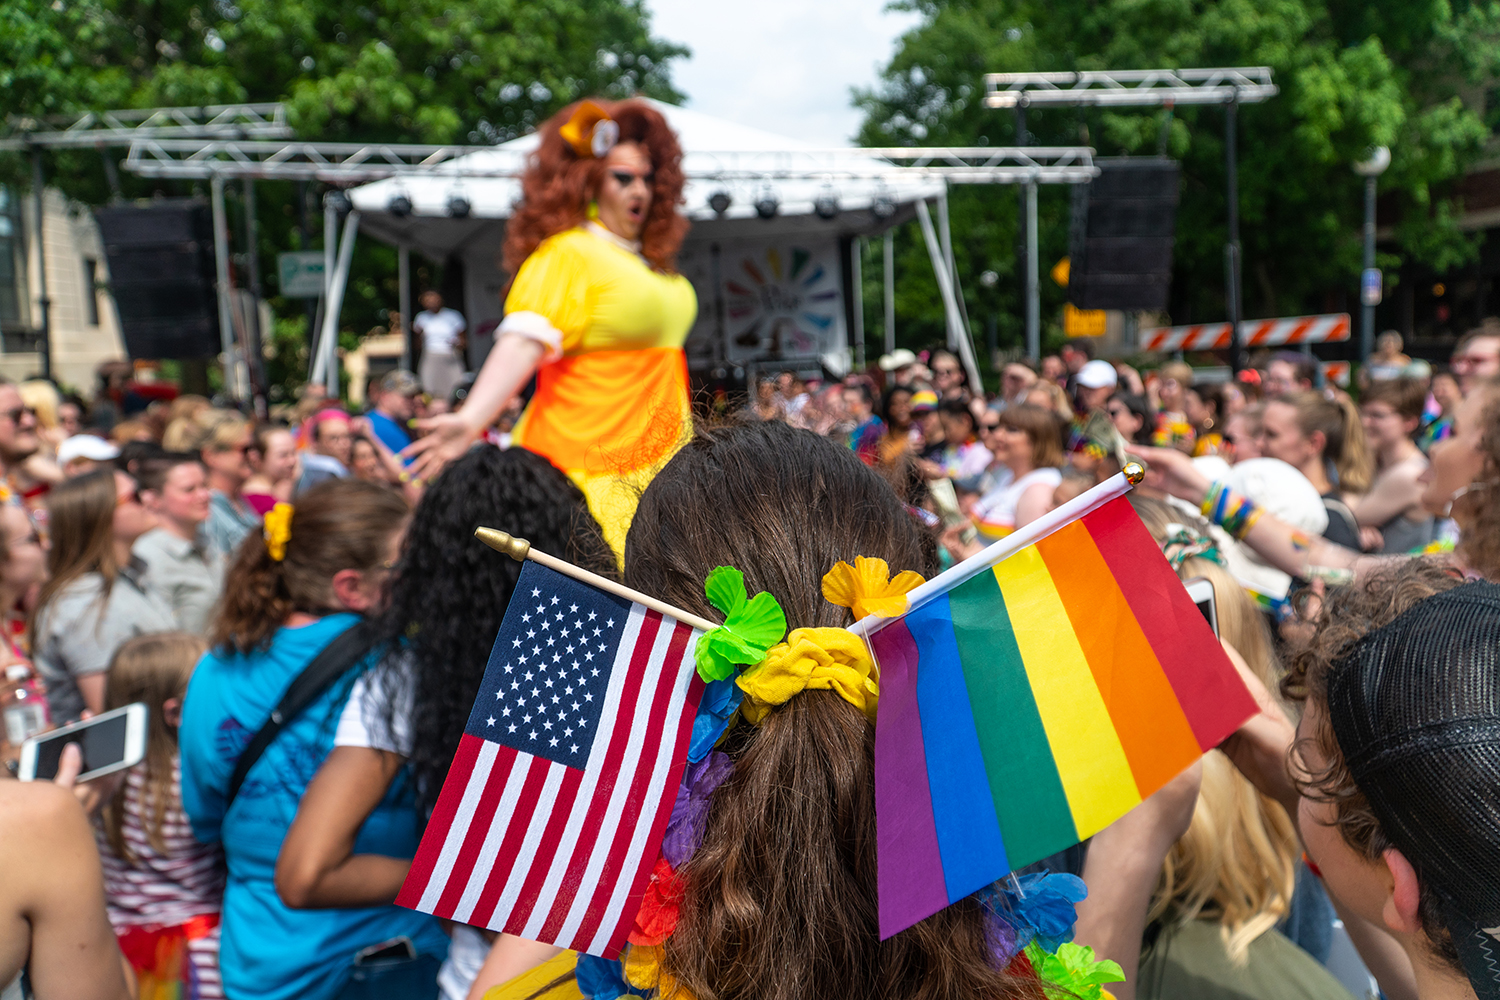 Iowa City community reacts to Pride celebrations across the globe